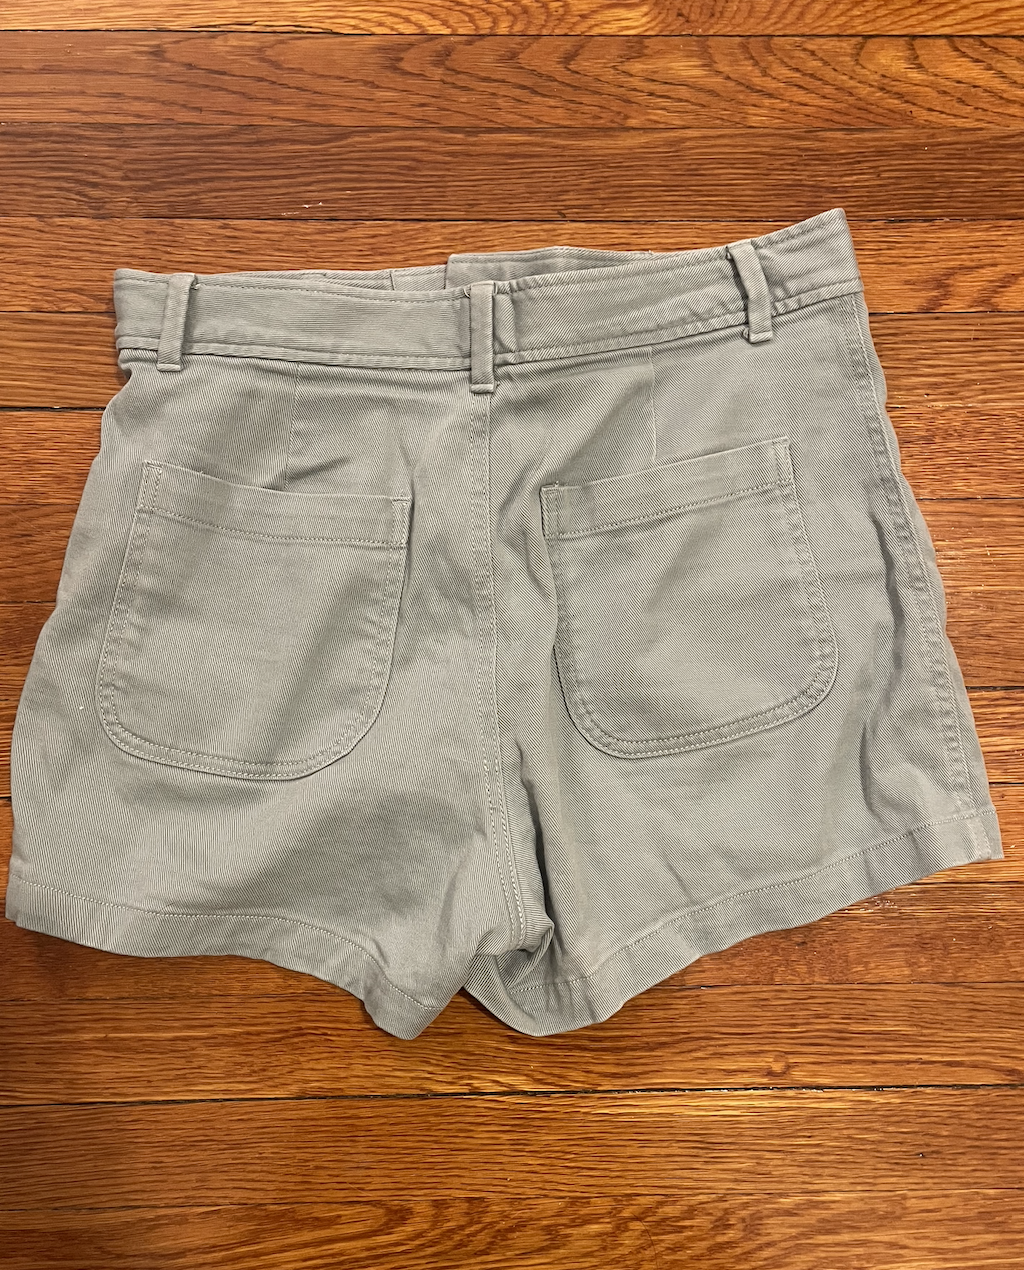 Gap green denim shorts - women's size 4 - EUC - button up front